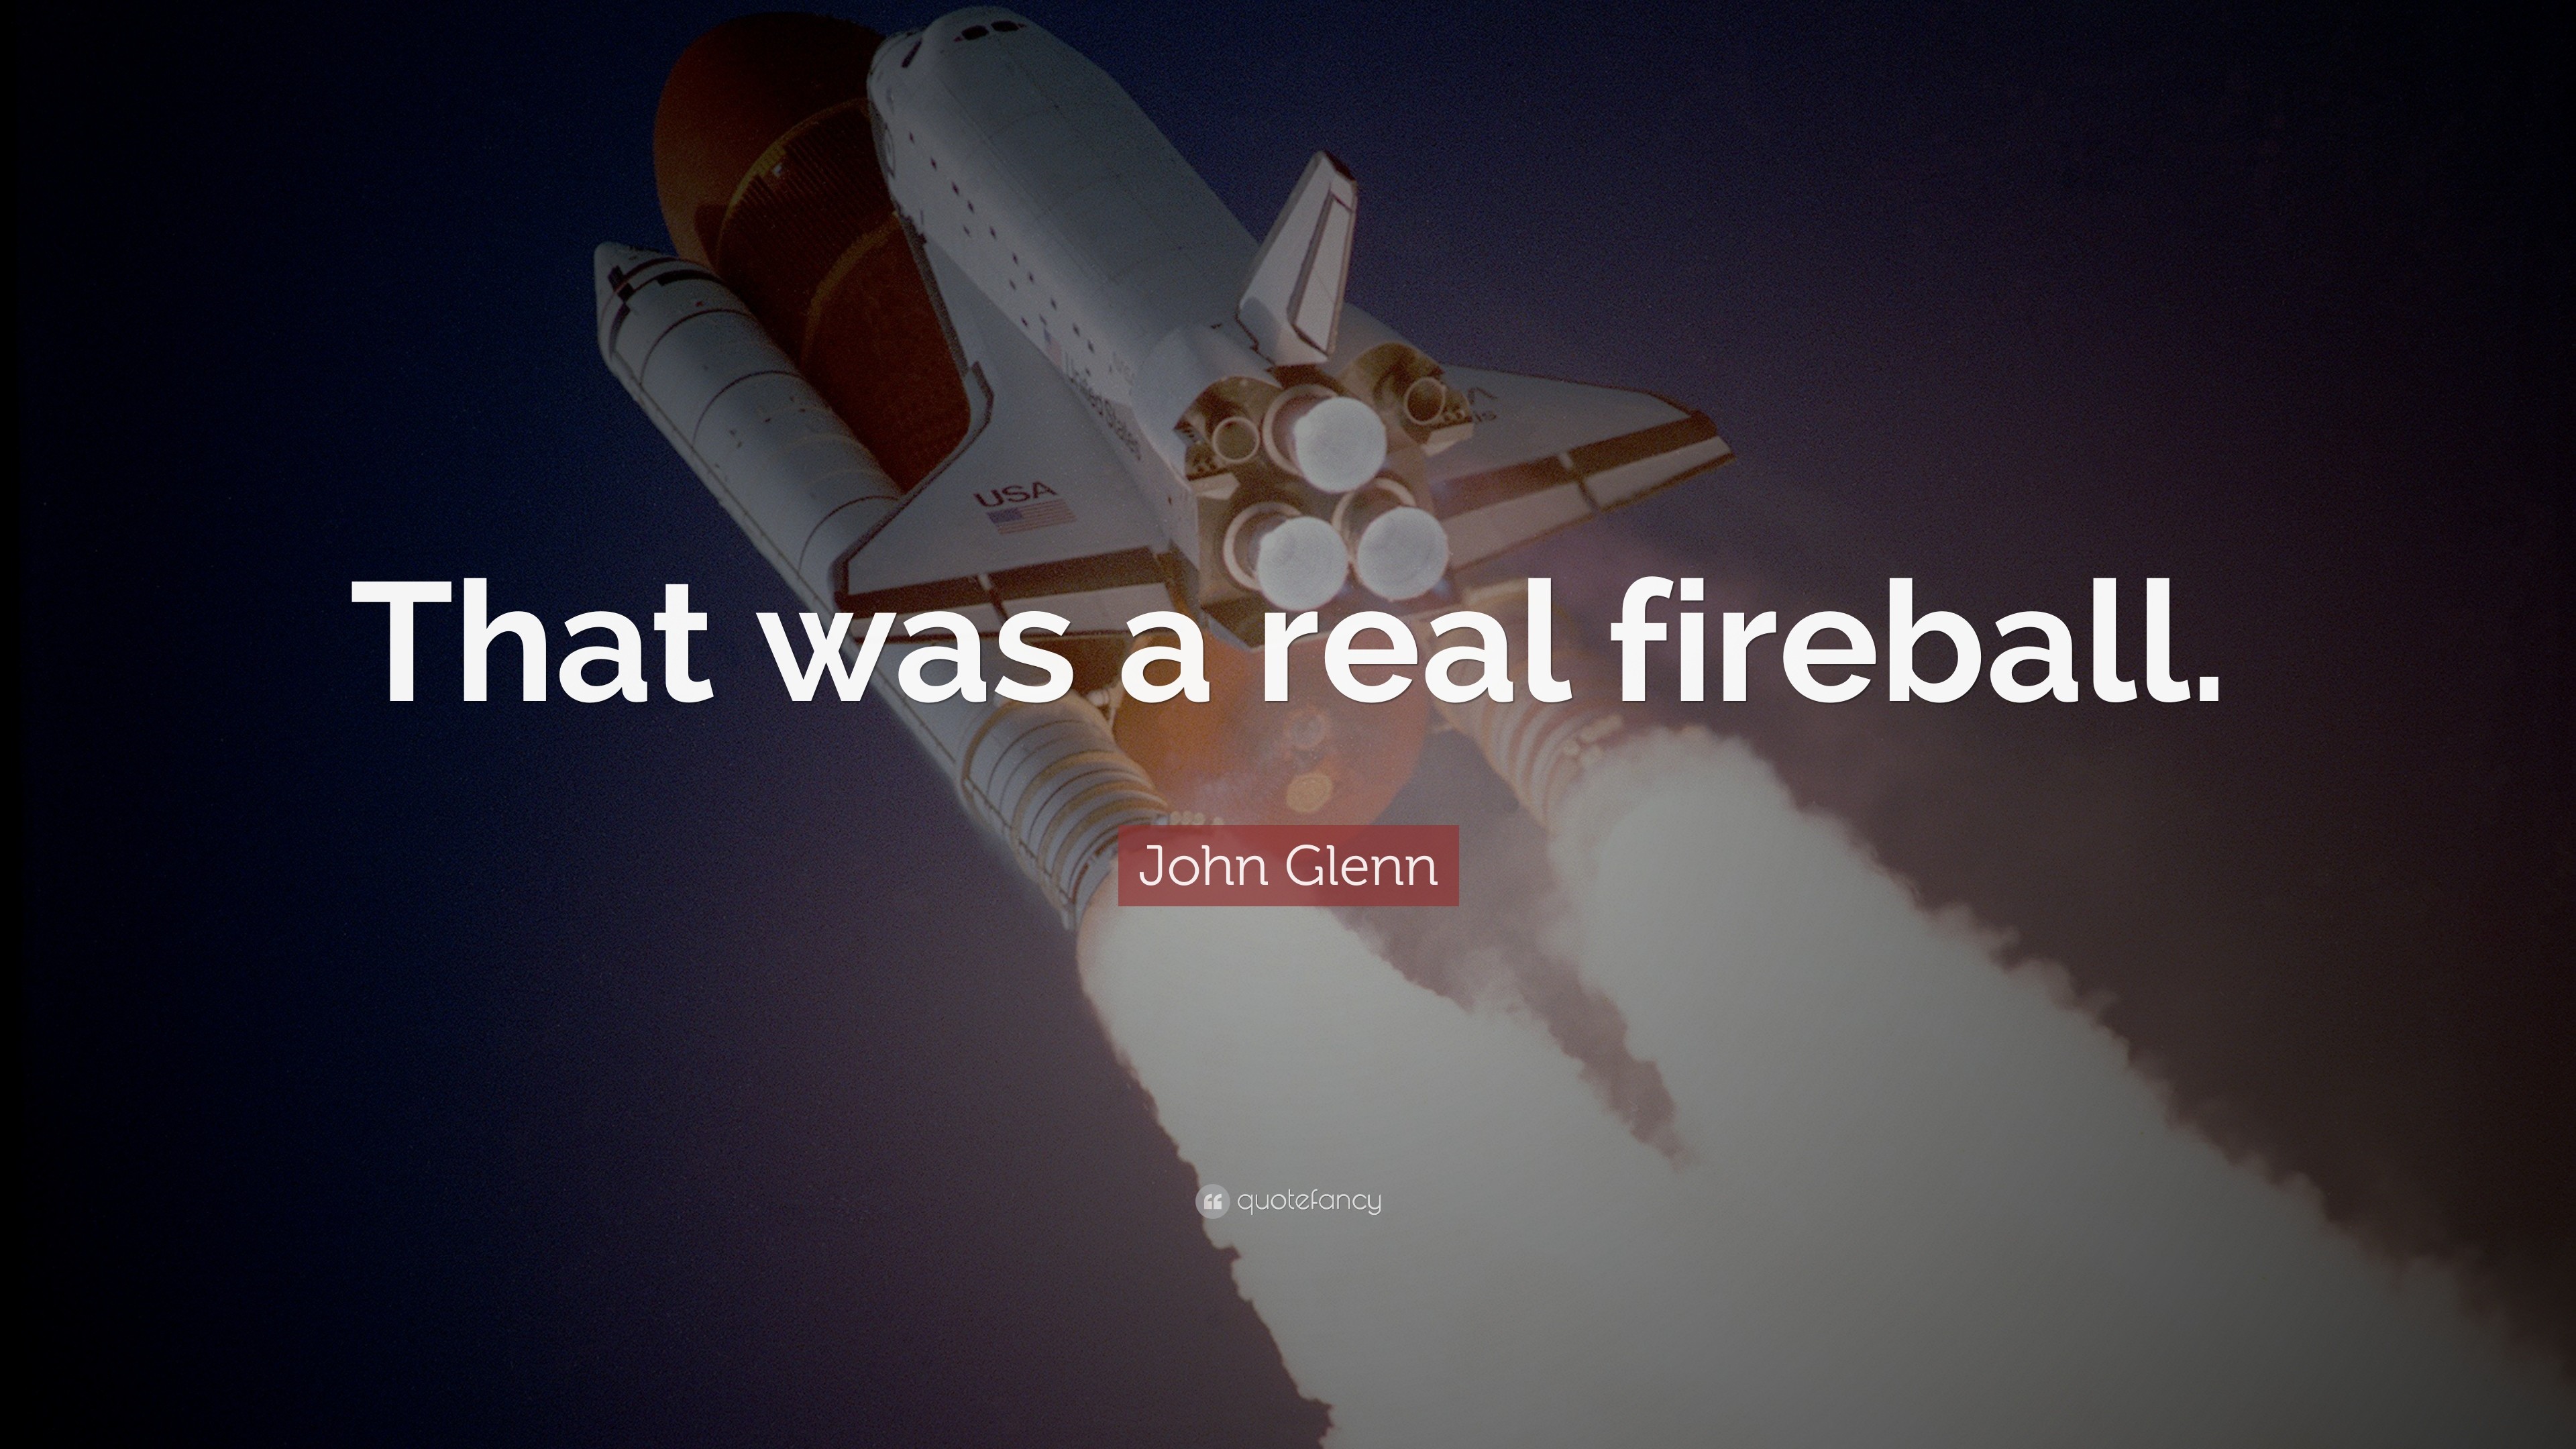 3840x2160 John Glenn Quote: “That was a real fireball.”